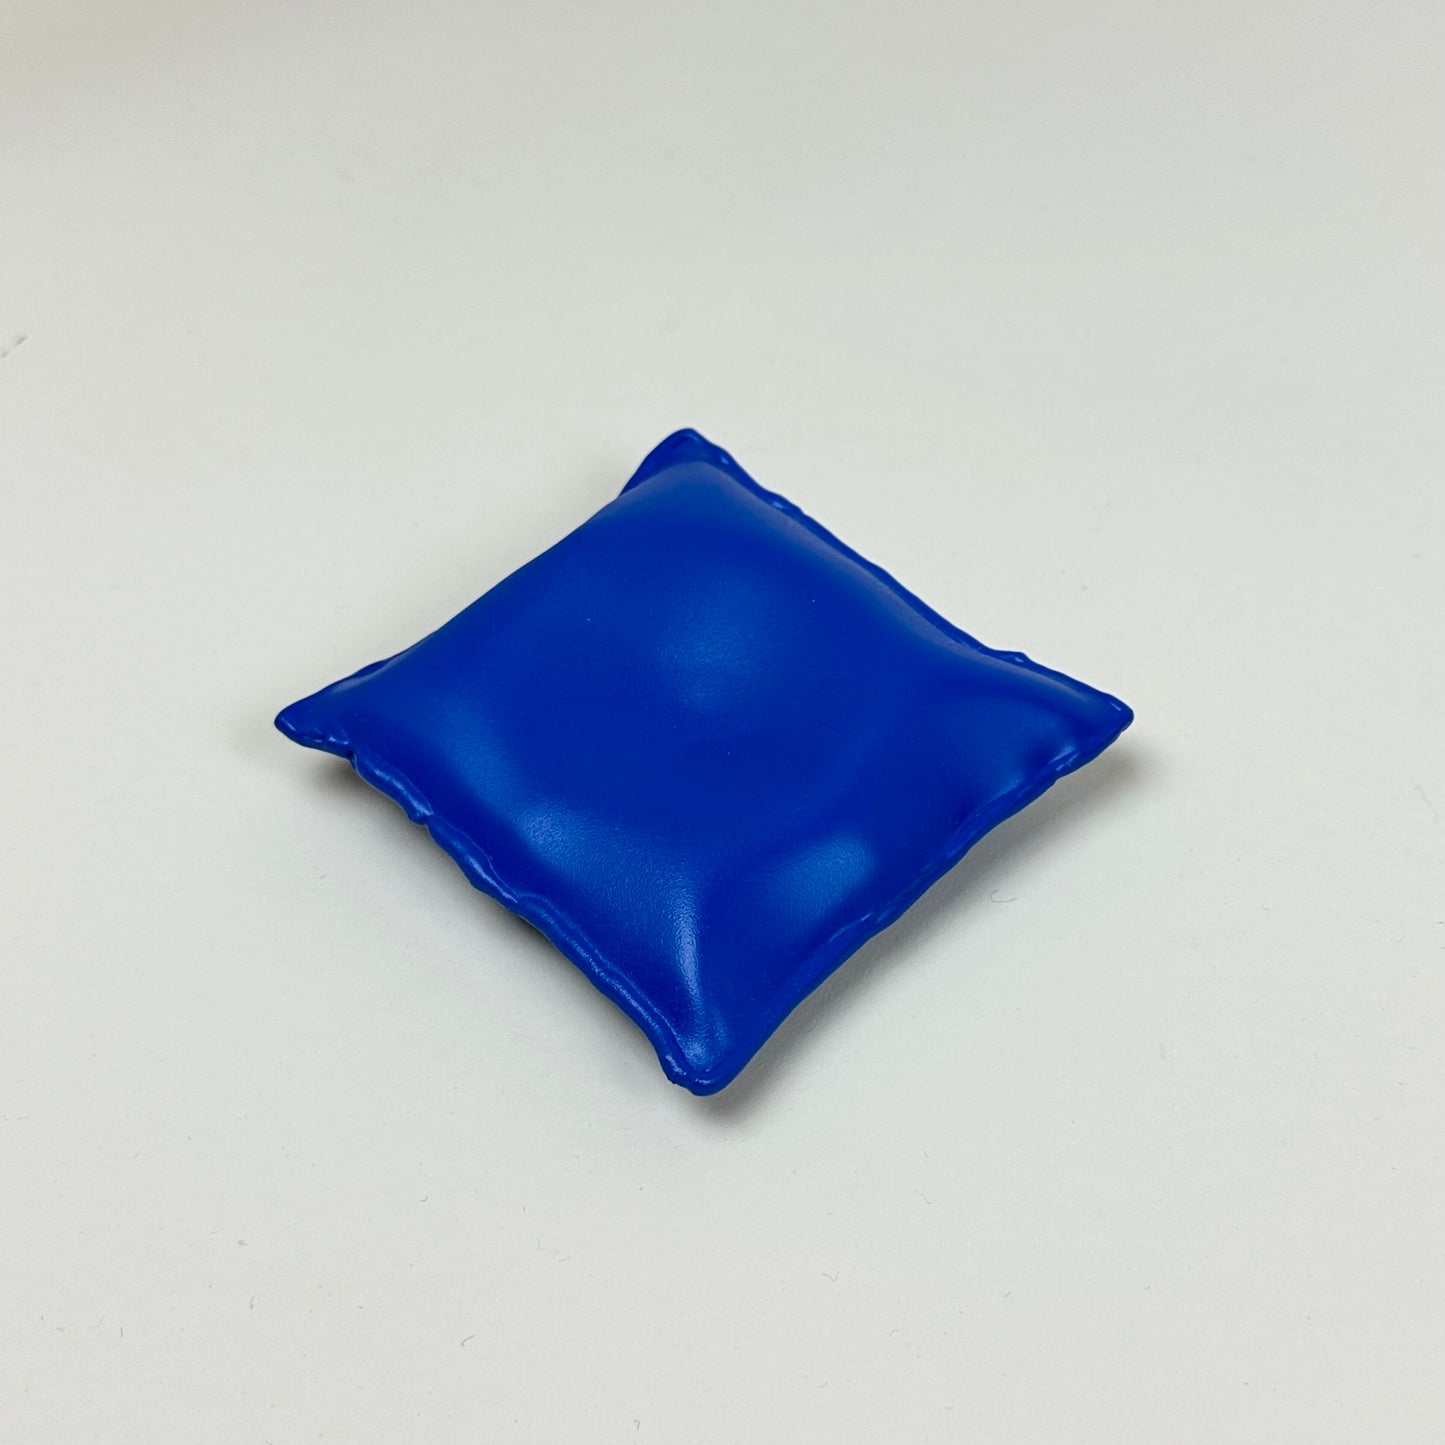 Blue aluminum pillow bowl by Emma Stocklassa